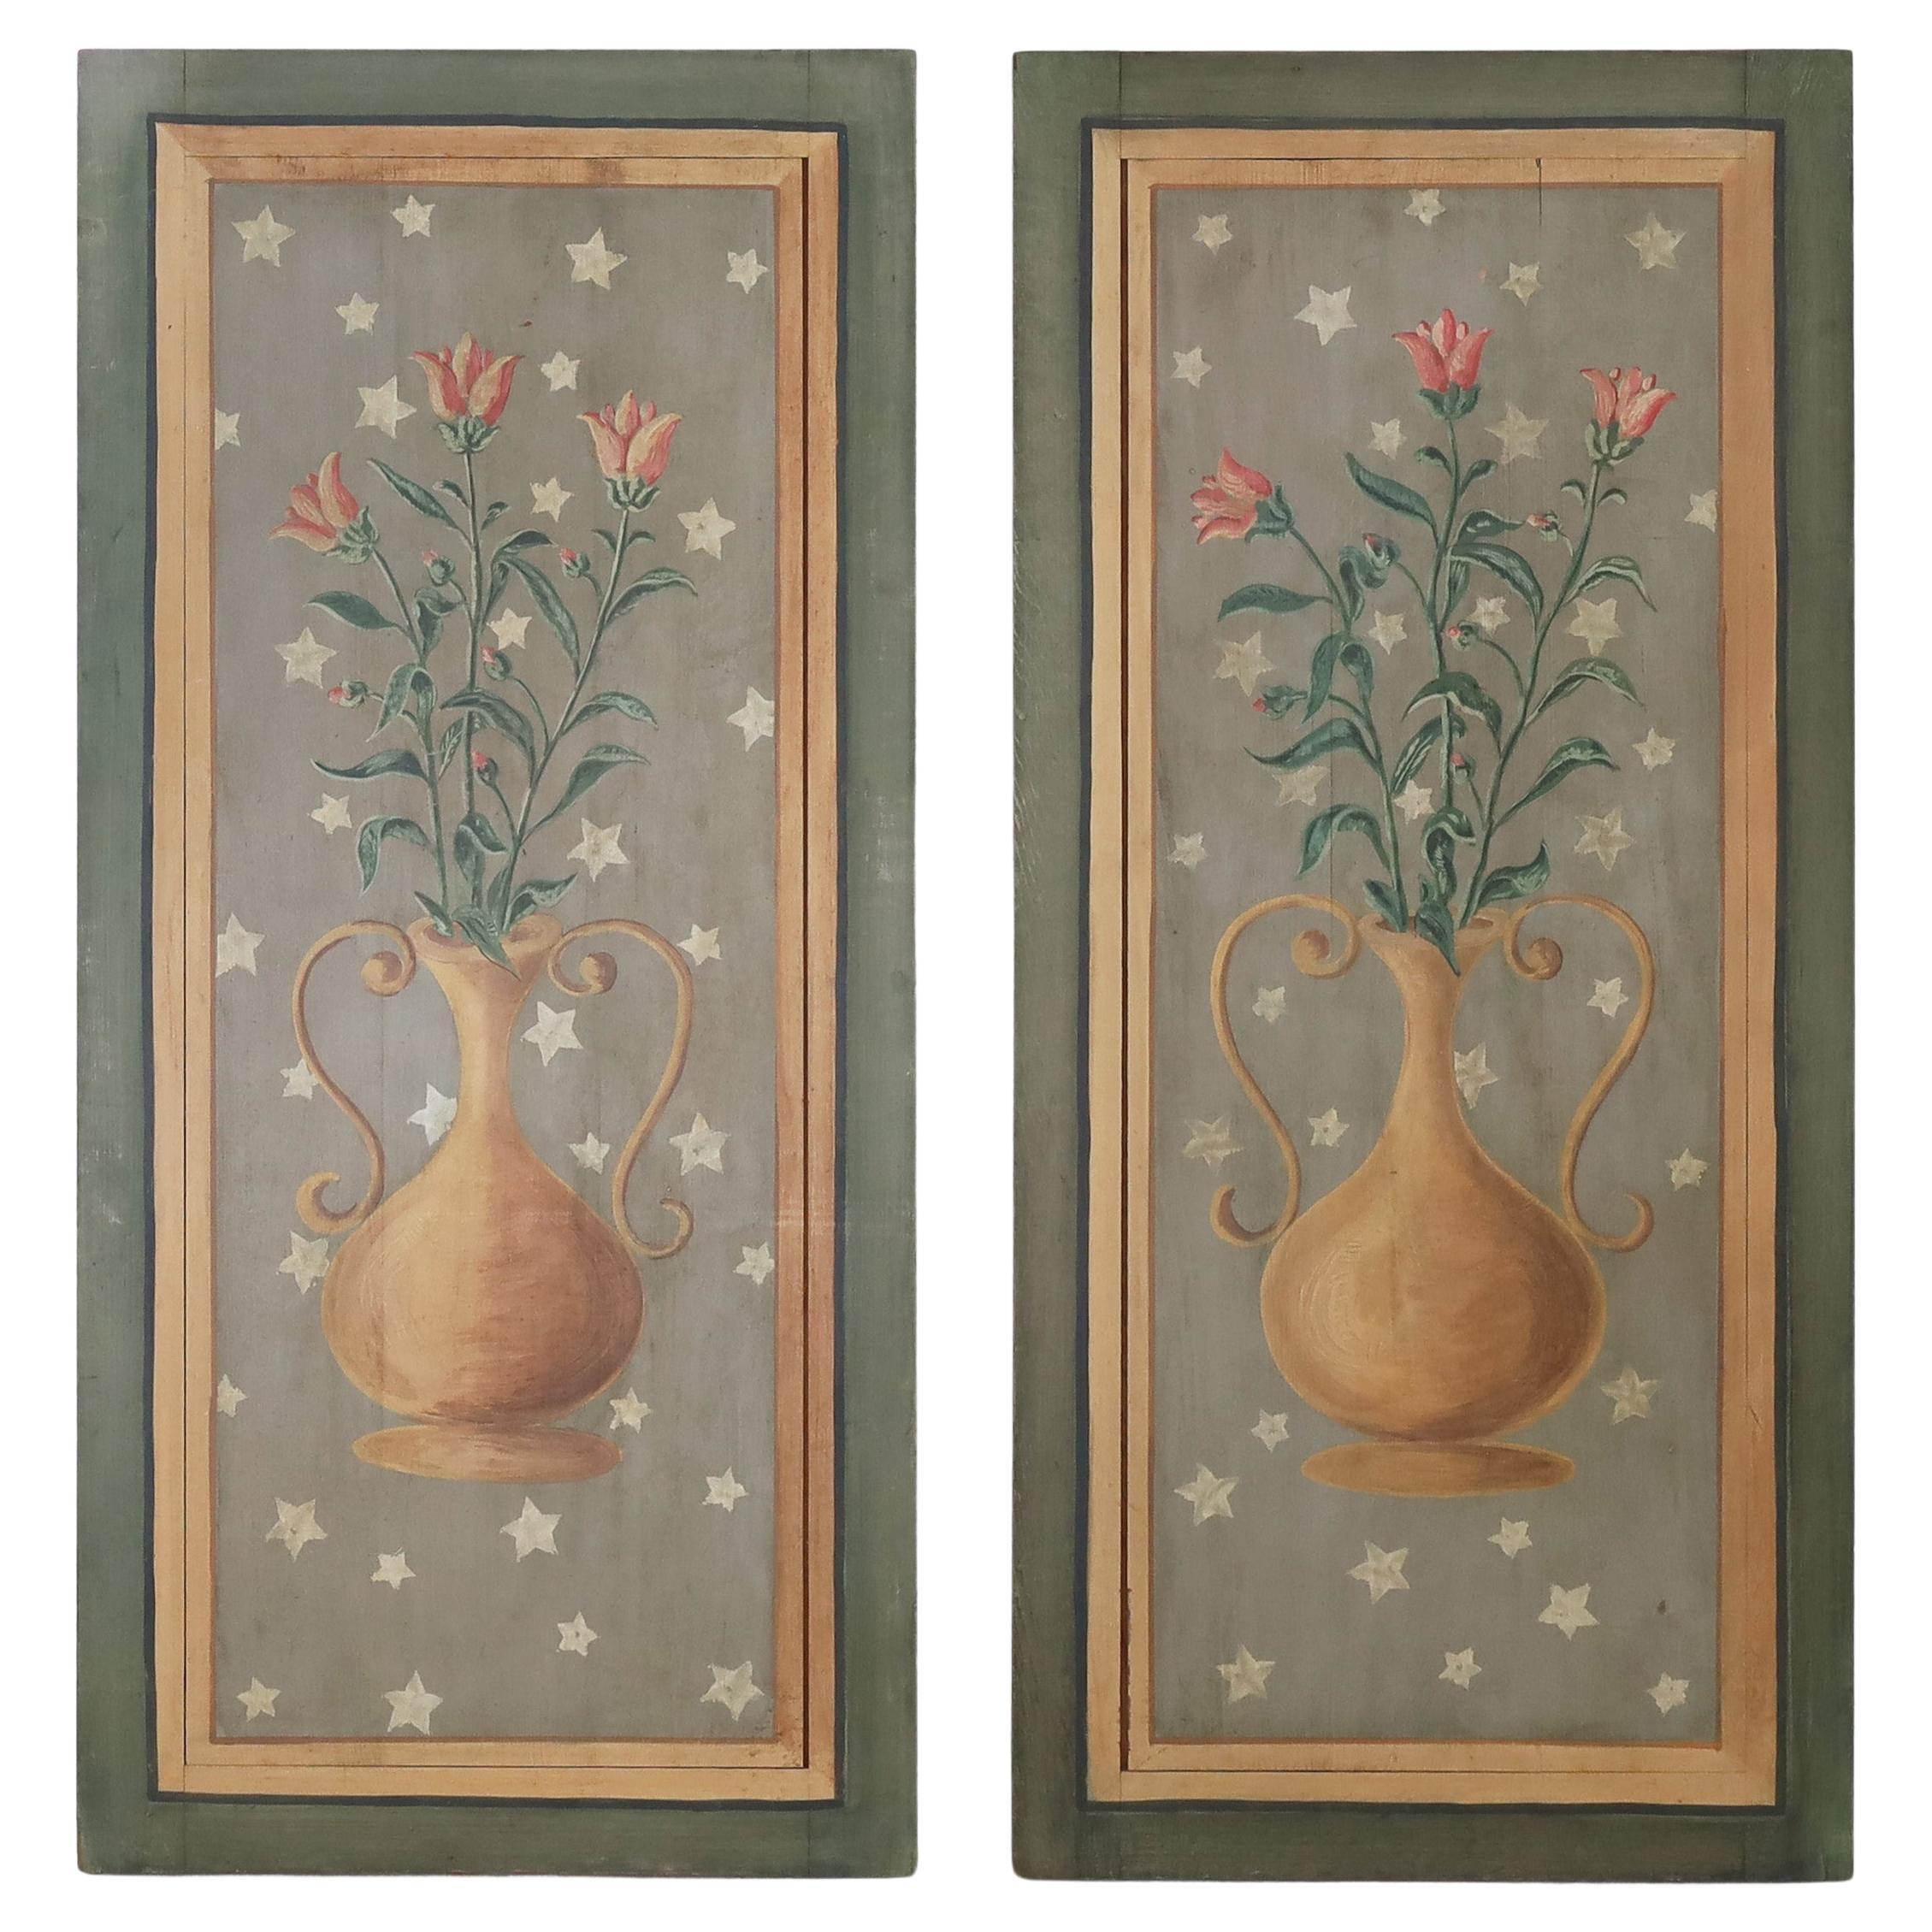 Pair of Antique Wood Decorative Painted Panels